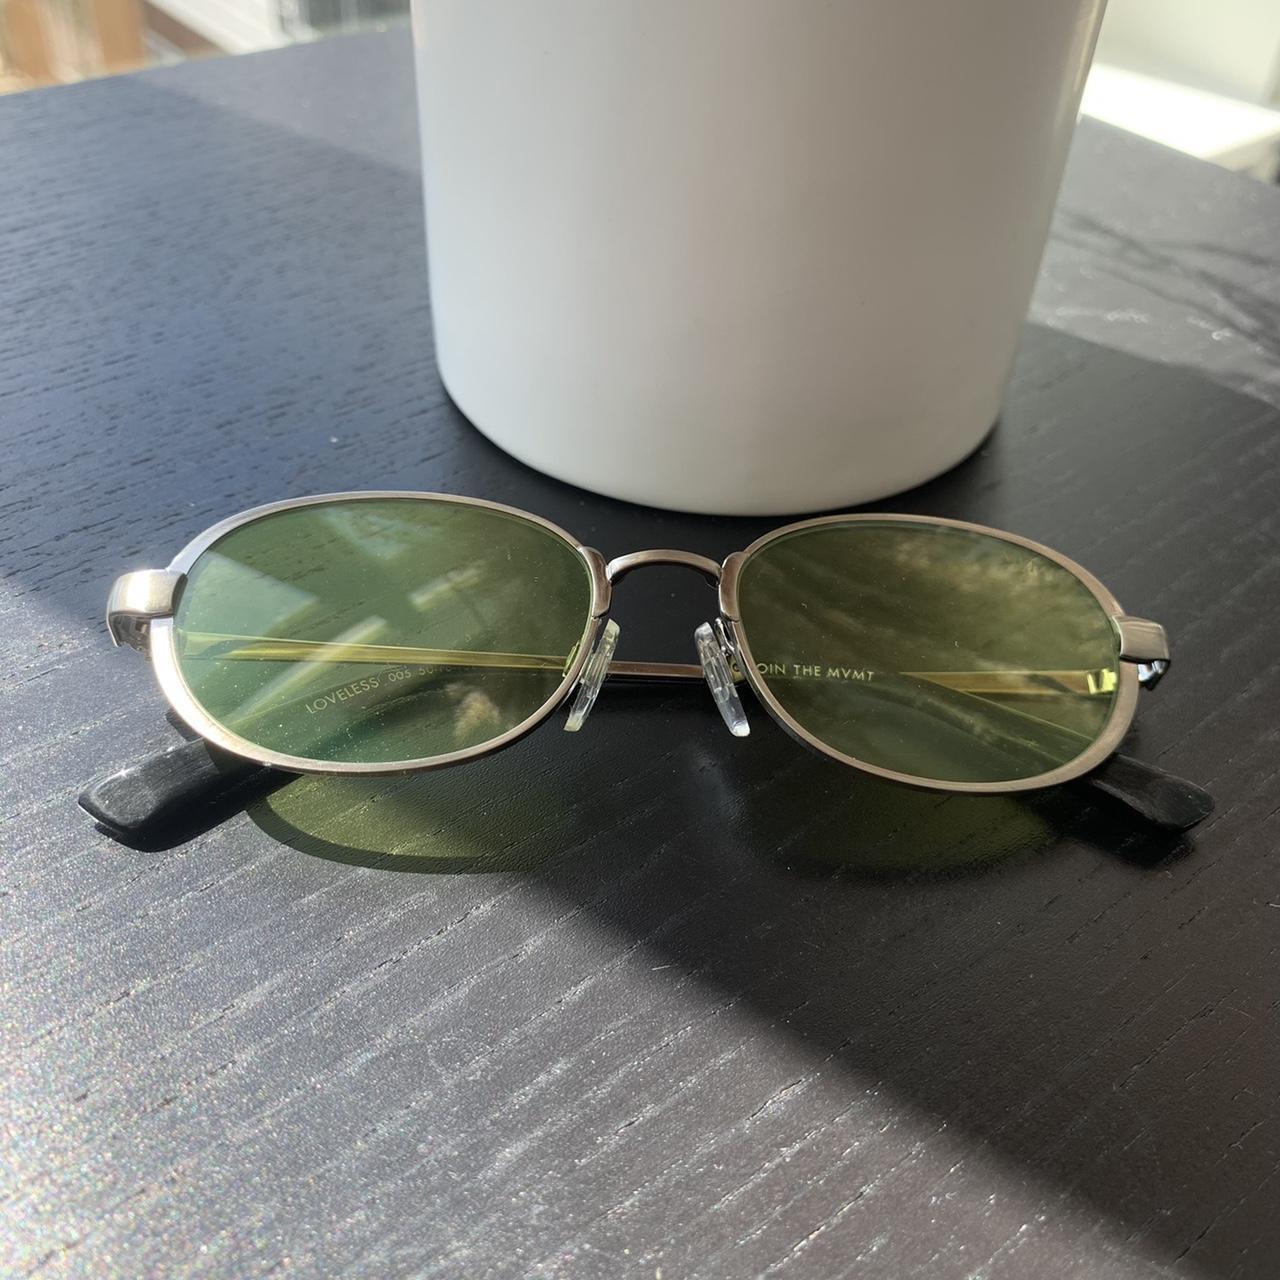 Product Image 2 - BRAND NEW MVMT Loveless Sunglasses
Only